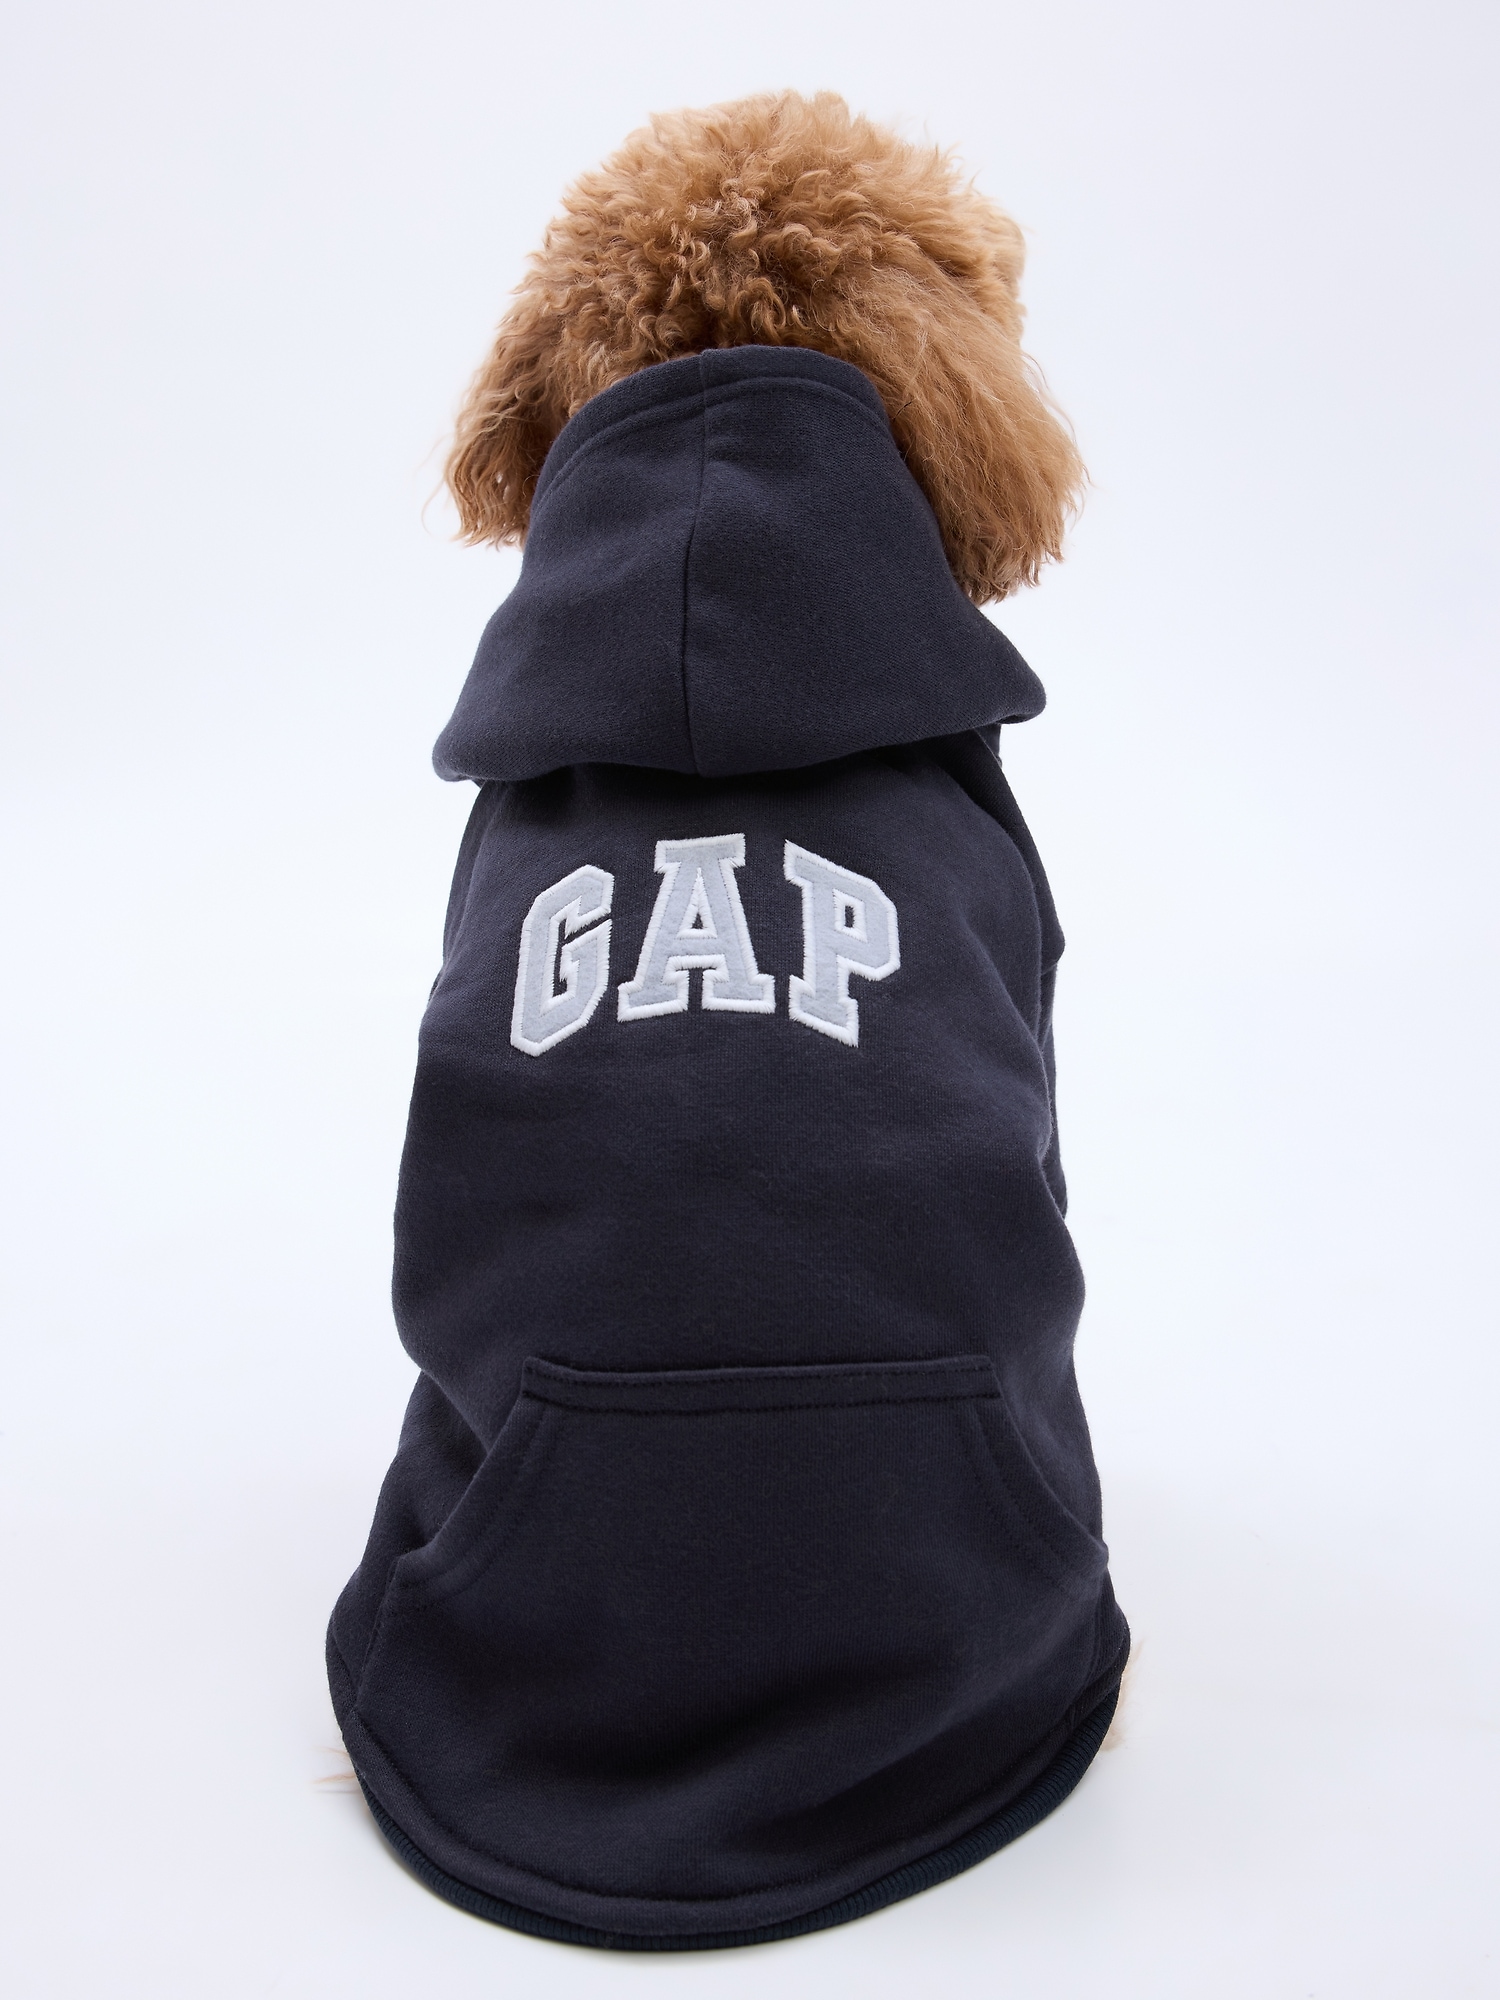 Gap Pet, Dog Clothes, Blue Denim Pet Jacket